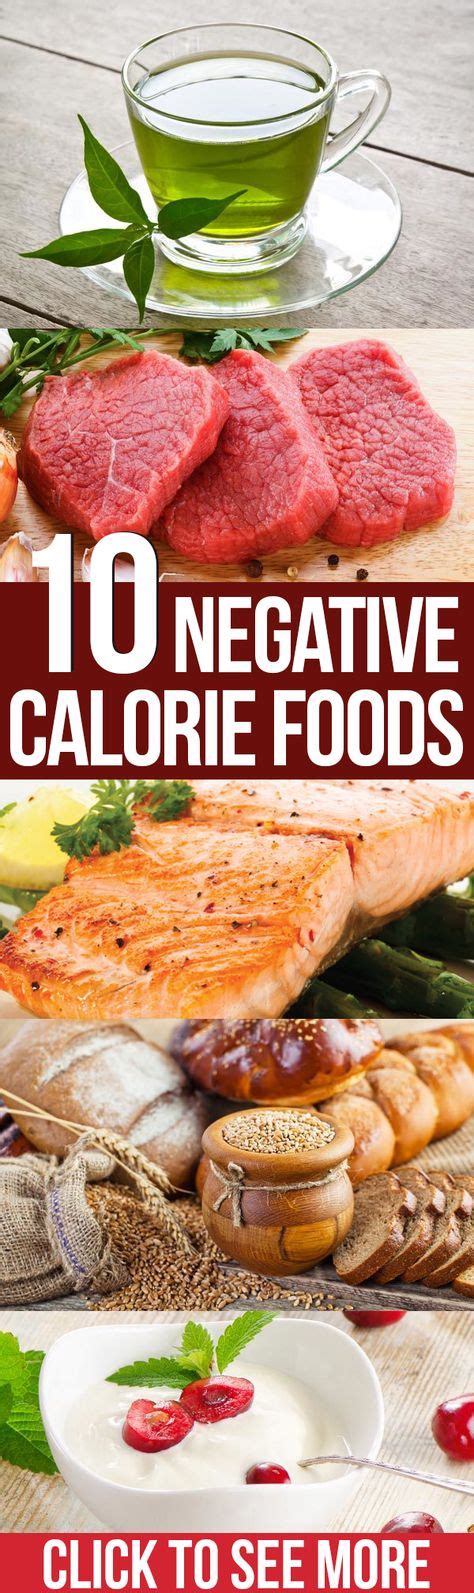 10 Best Empty Calorie Foods Images Healthy Recipes Food Zero